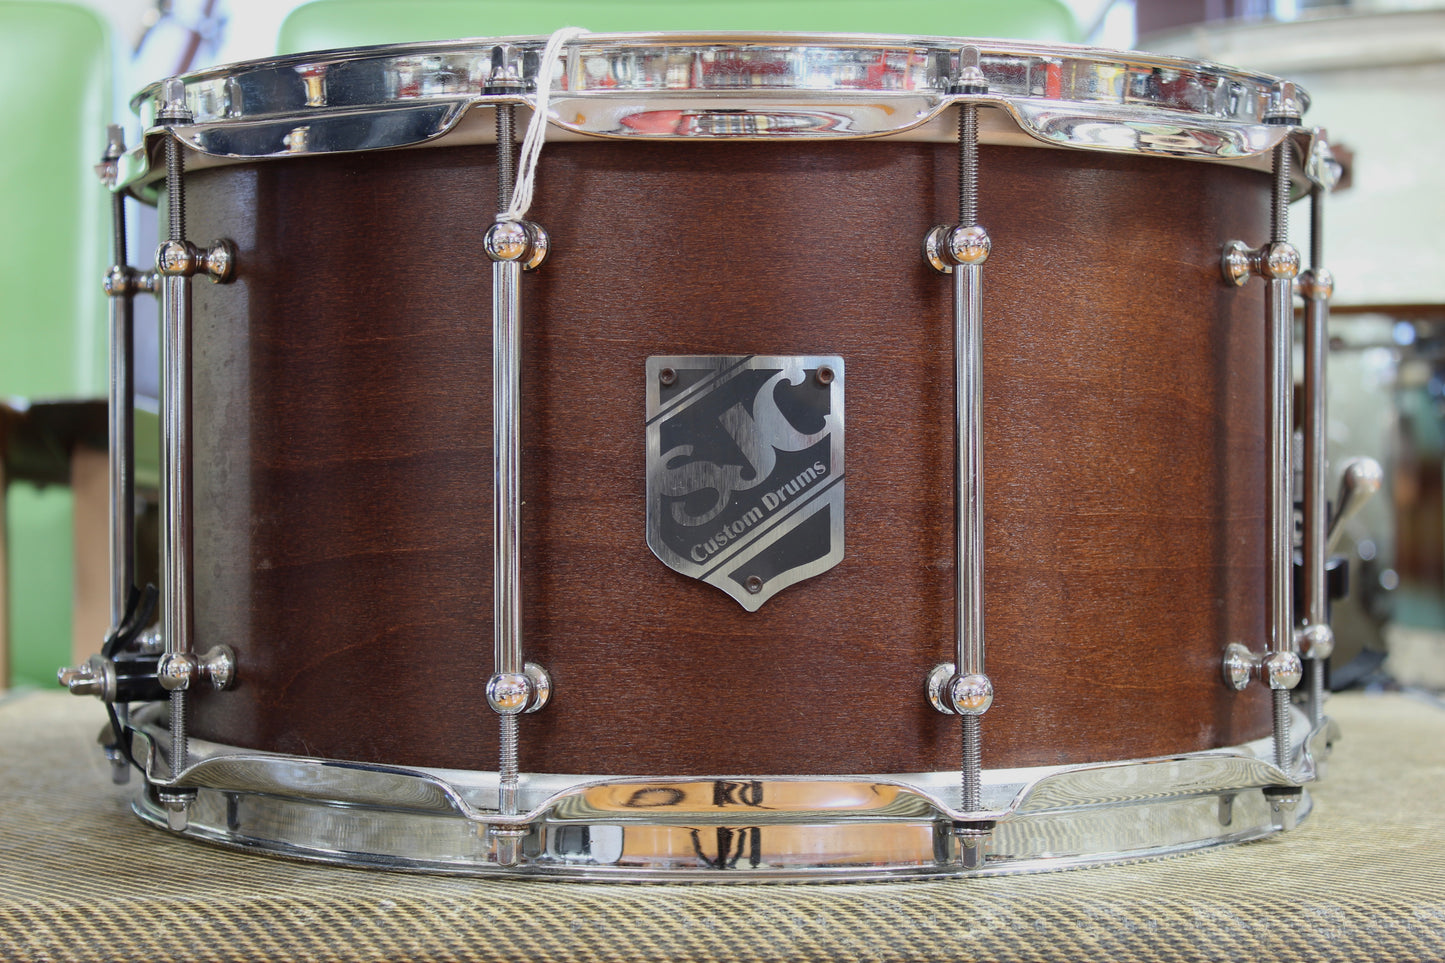 SJC Custom Drums 8"x14" Snare Drum in Mahogany Satin Stain